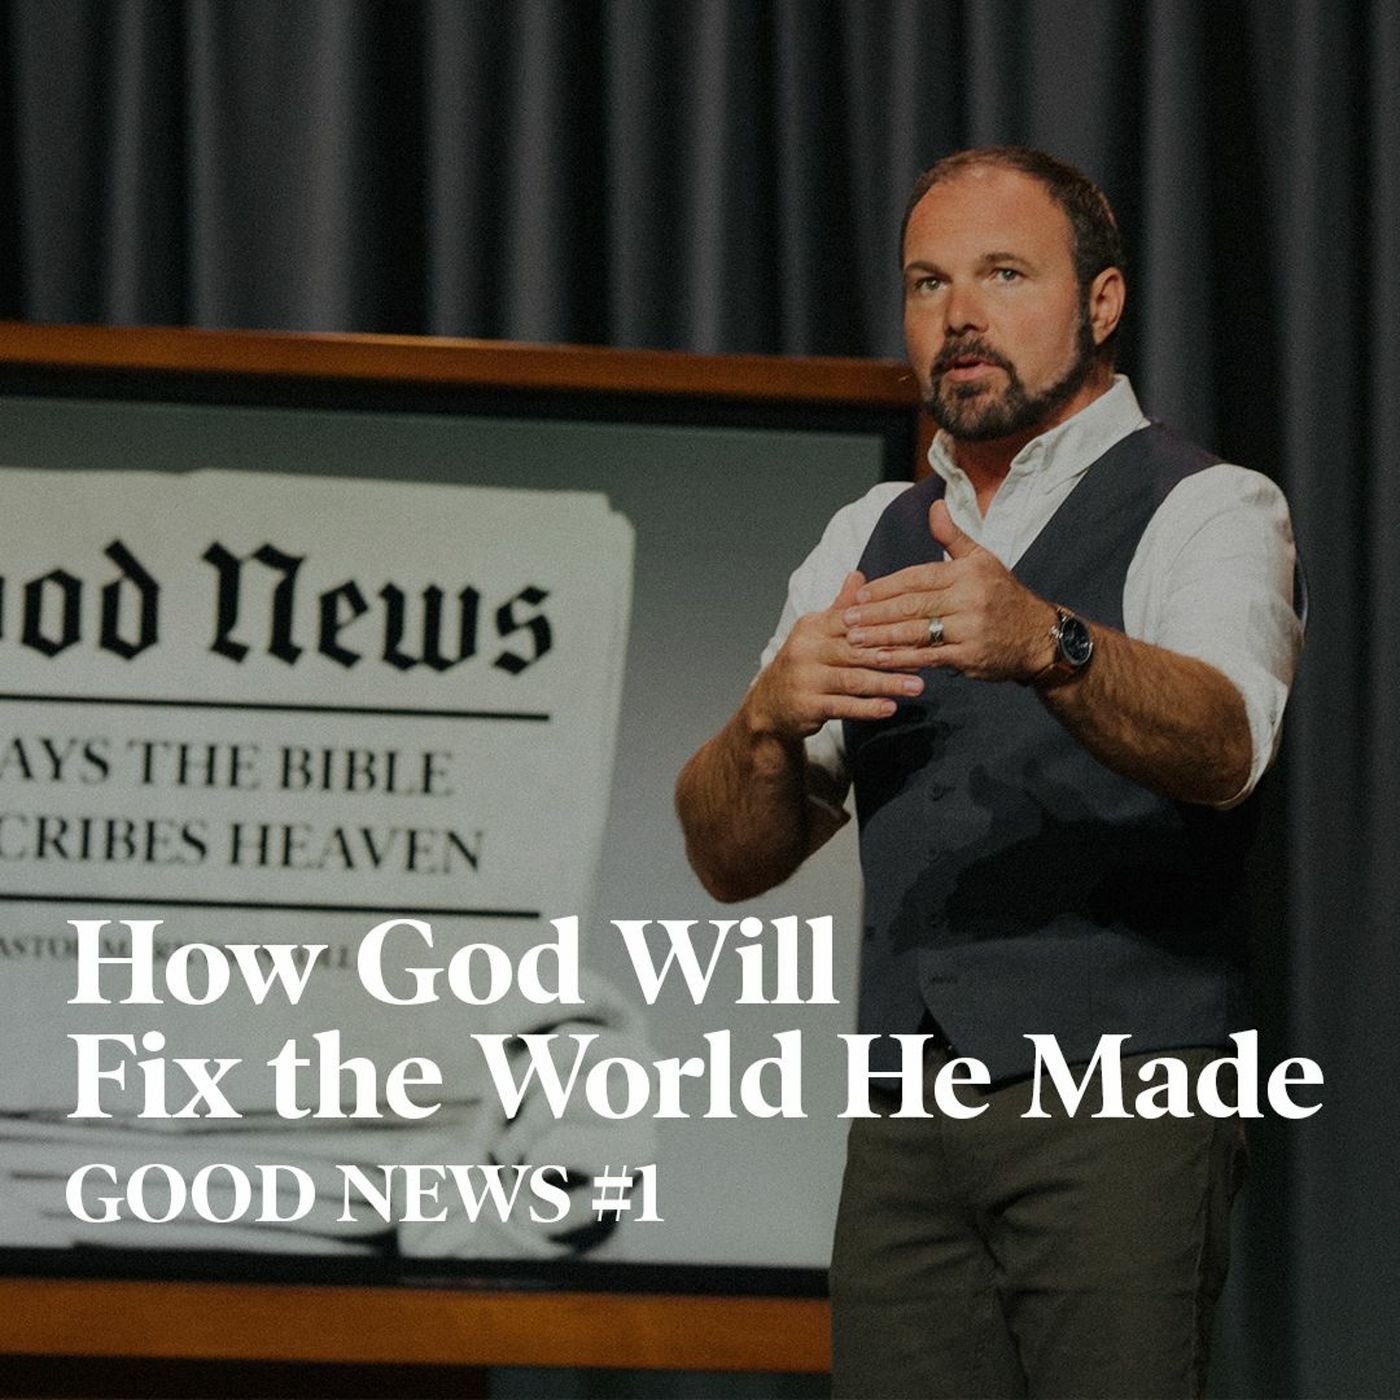 Good News - How Will God Fix the World He Made